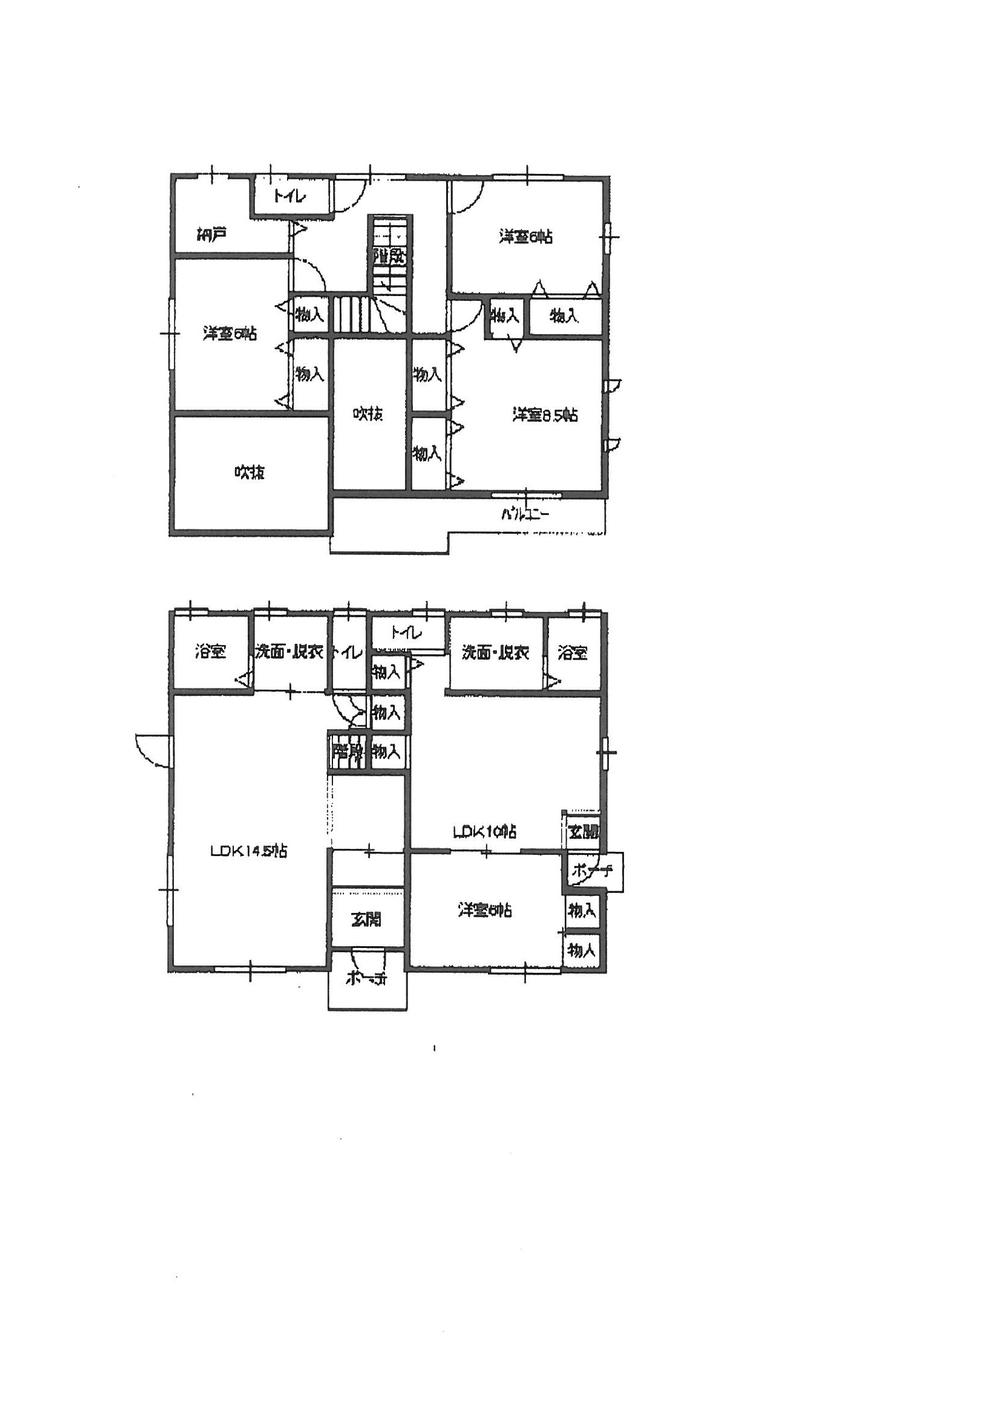 Floor plan. 22,300,000 yen, 4LLDDKK, Land area 184.14 sq m , Building area 146.24 sq m